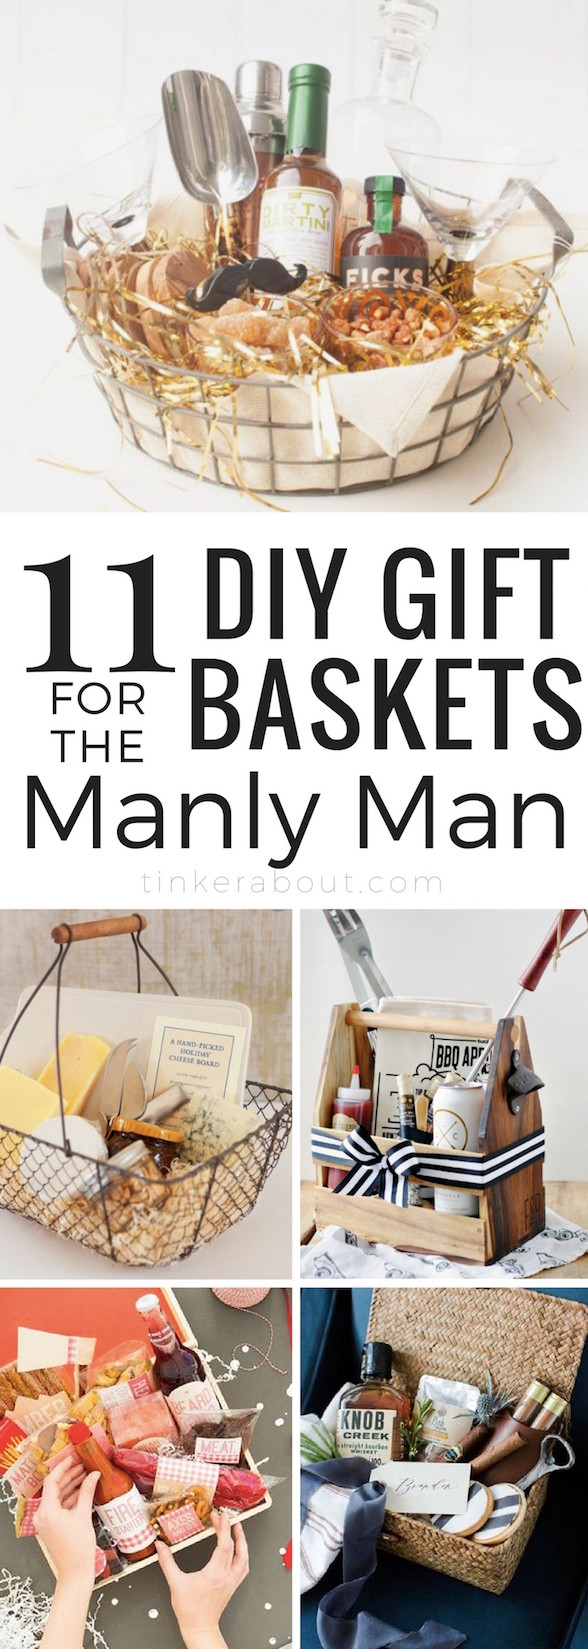 Gift Basket Ideas Men
 11 Best Gift Basket Ideas For Him